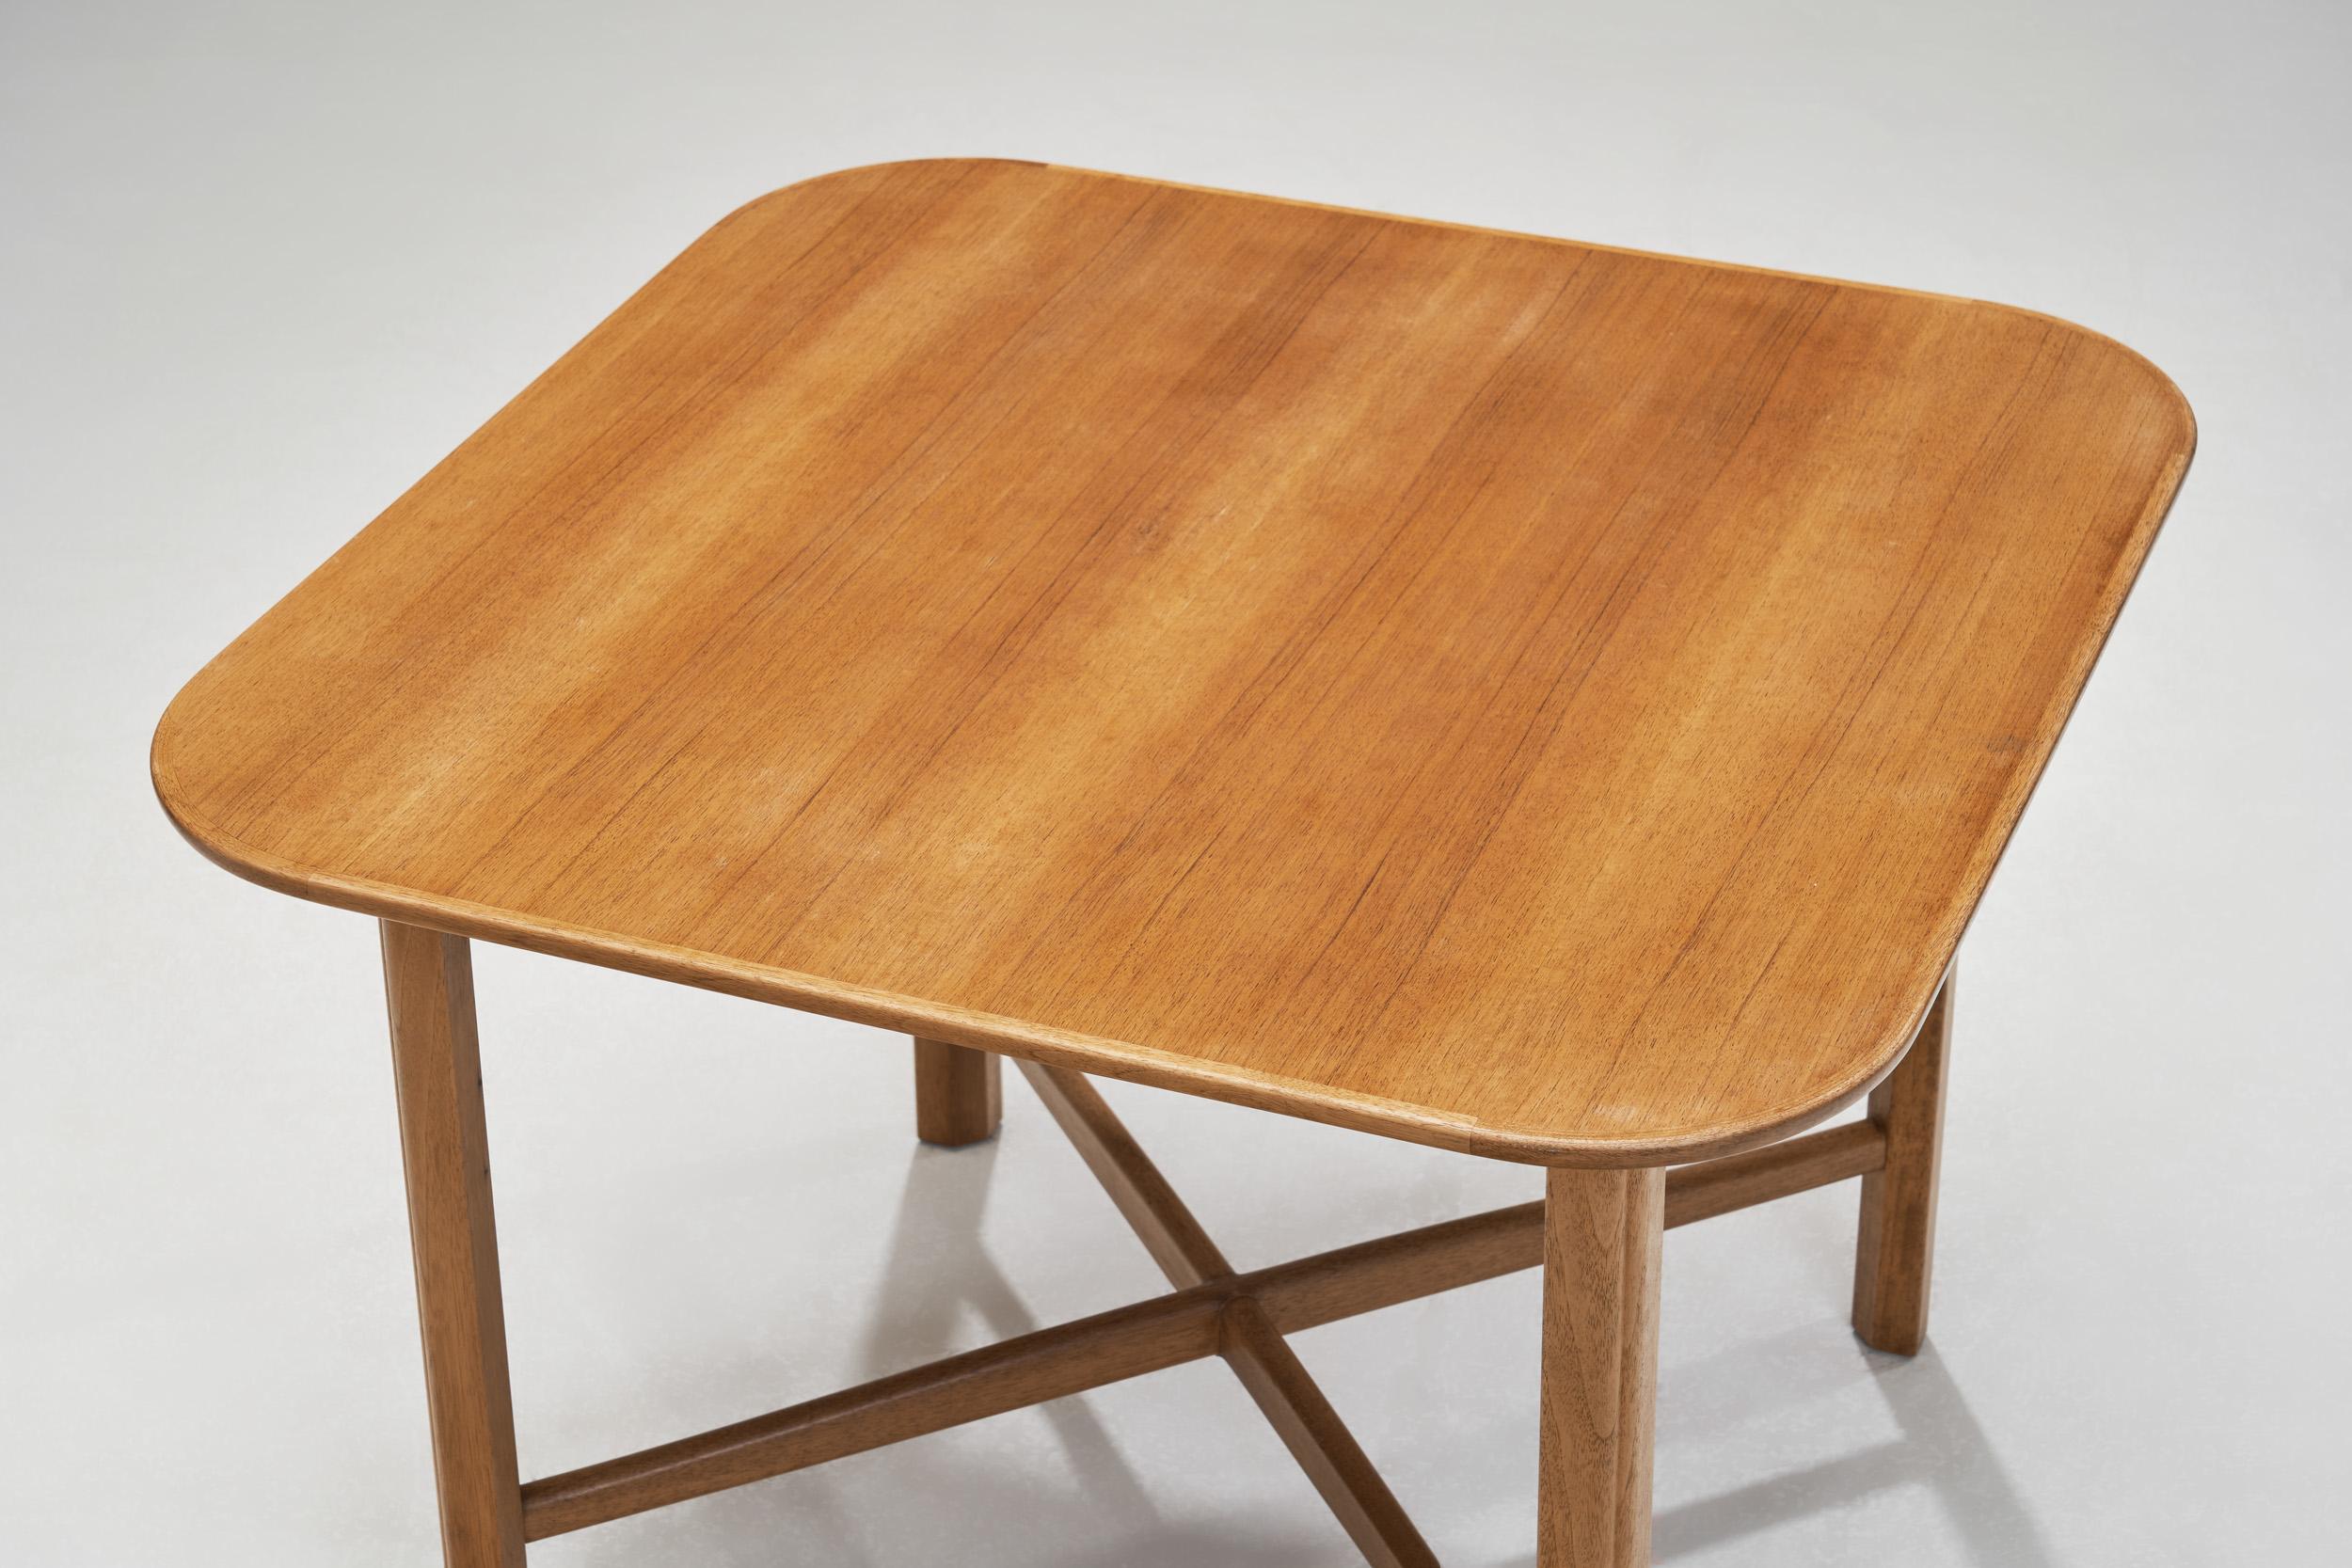 Mid-20th Century “Alltid Redo” Coffee Table by Carl Malmsten, Sweden 1950s For Sale